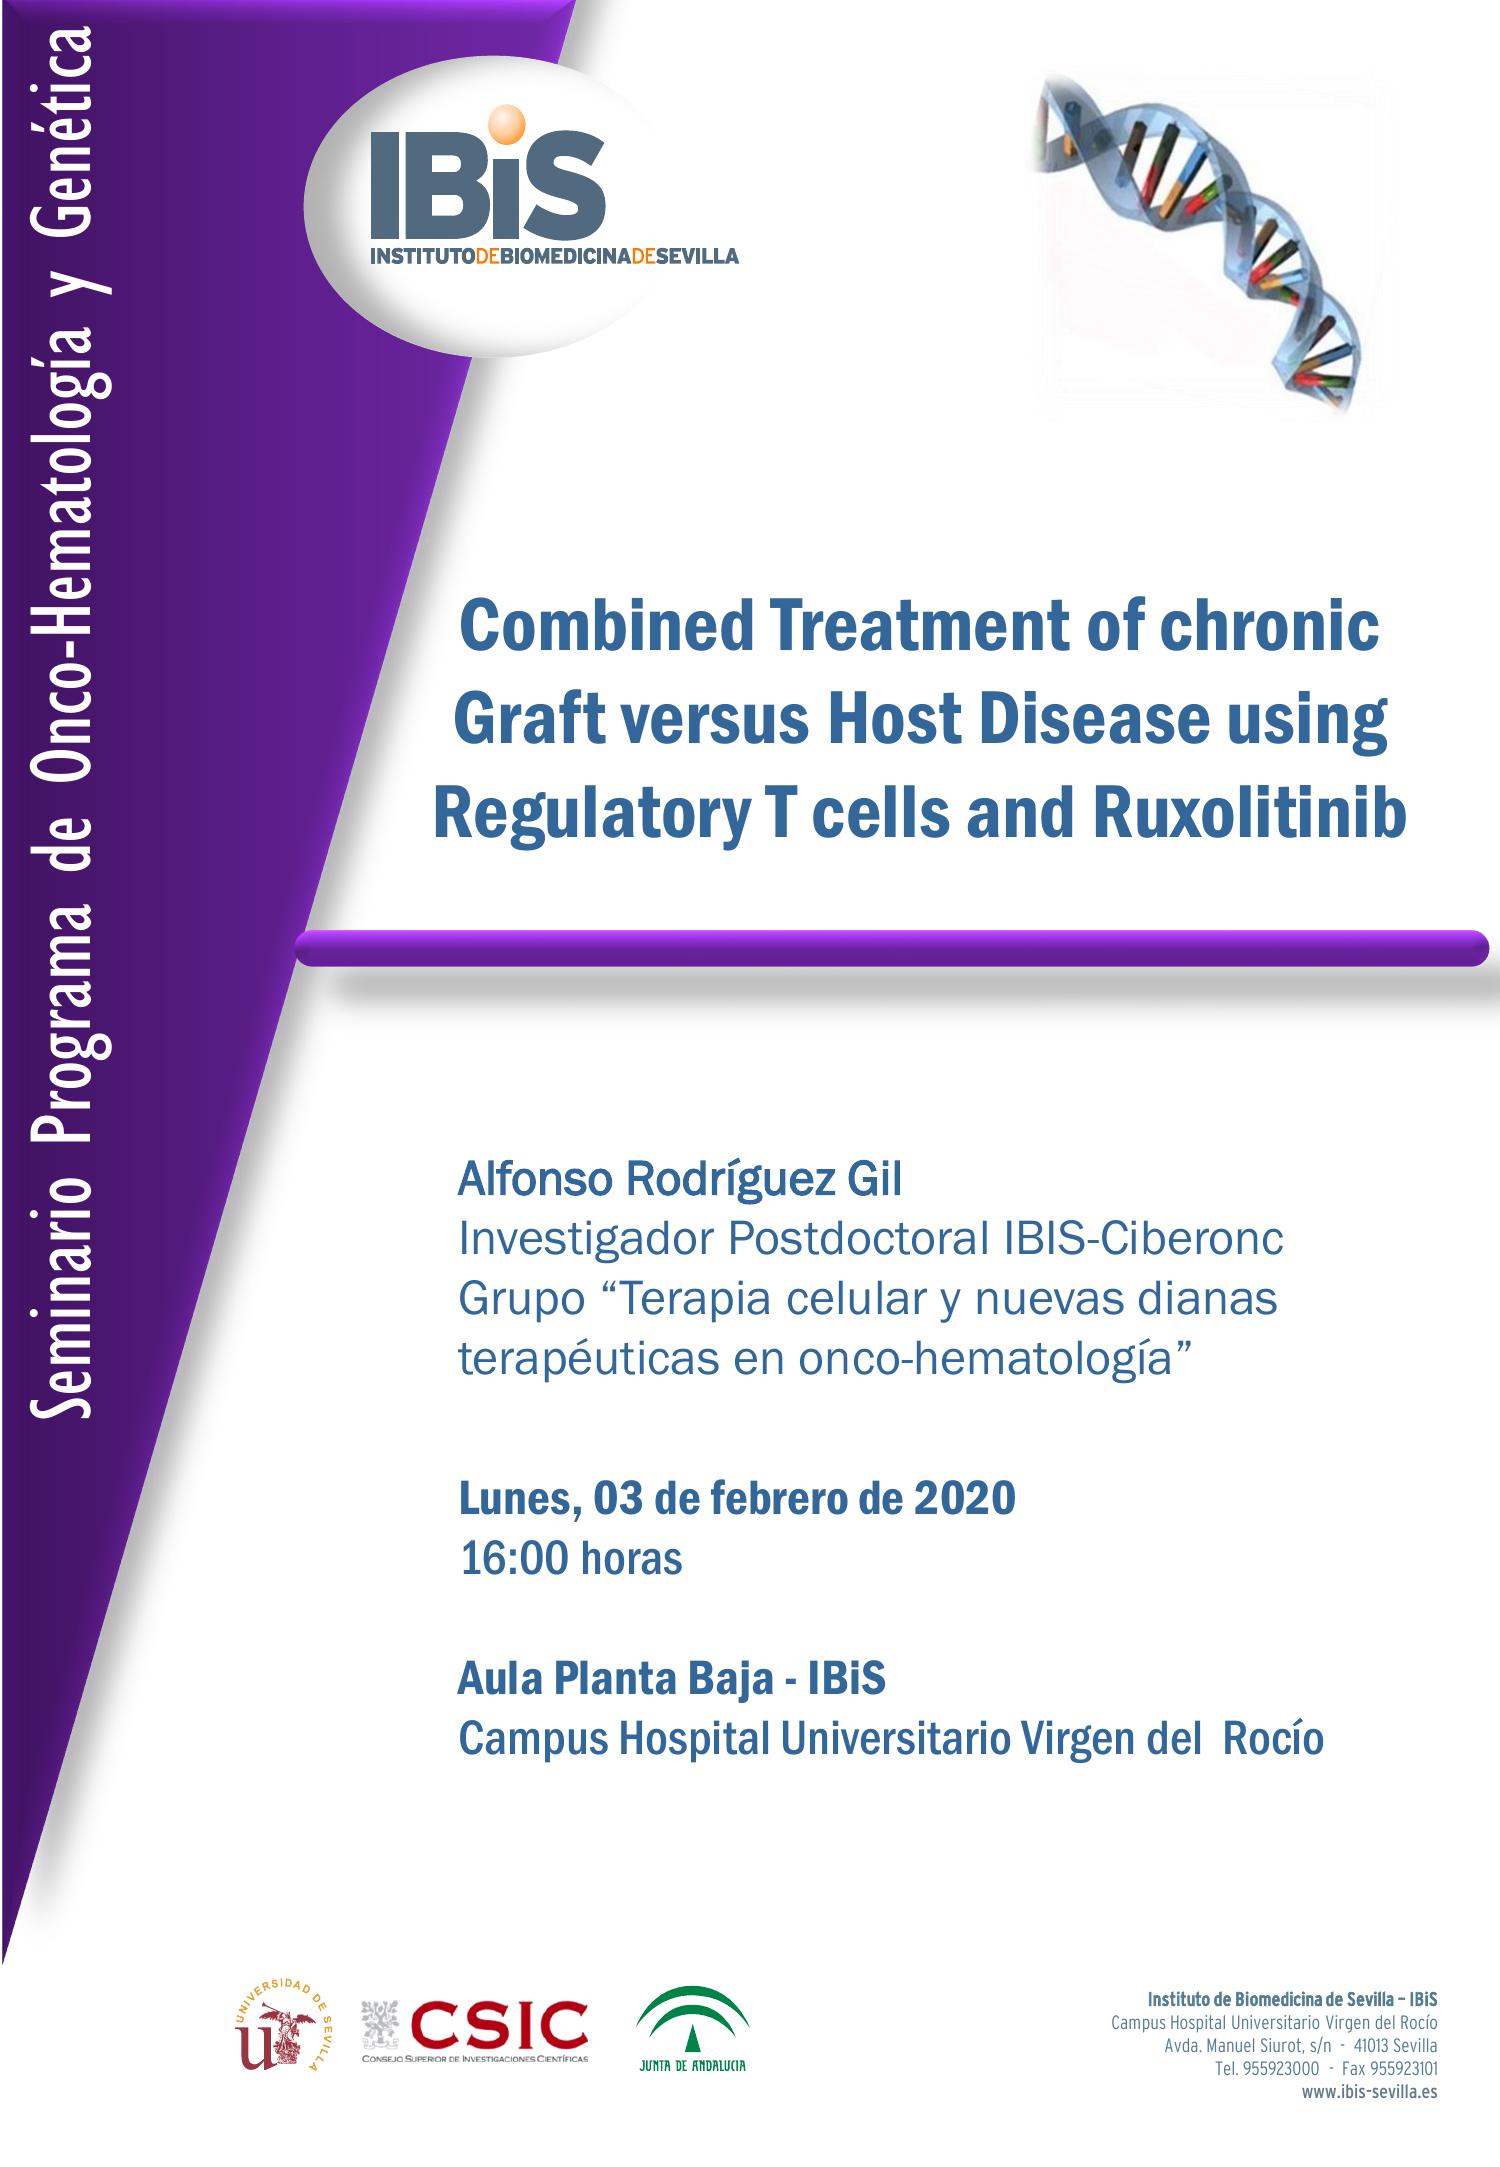 Poster: Combined Treatment of chronic Graft versus Host Disease using Regulatory T cells and Ruxolitinib